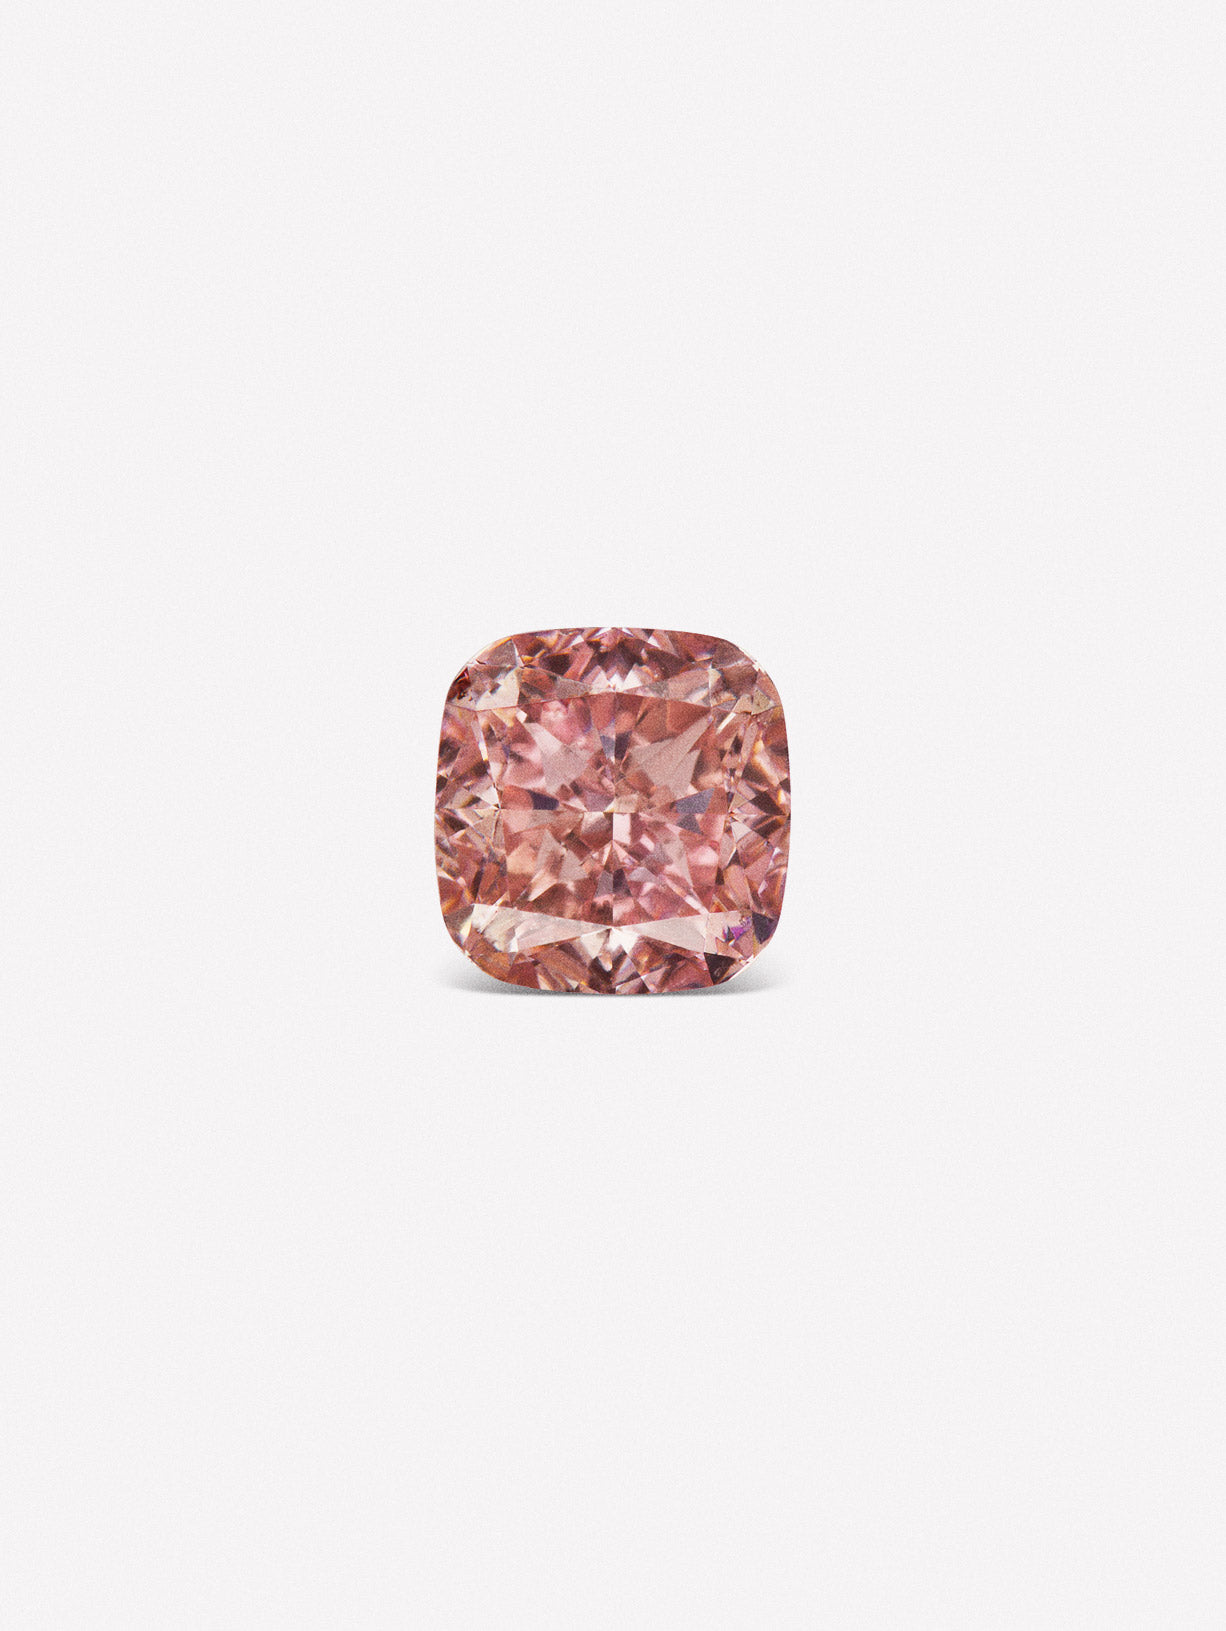 Cushion Cut Argyle Pink™ Diamond - Pink Diamonds, J FINE - J Fine, Pink Diamond - Pink Diamond Jewelry, cushion-cut-argyle-pink™-diamond - Argyle Pink Diamonds